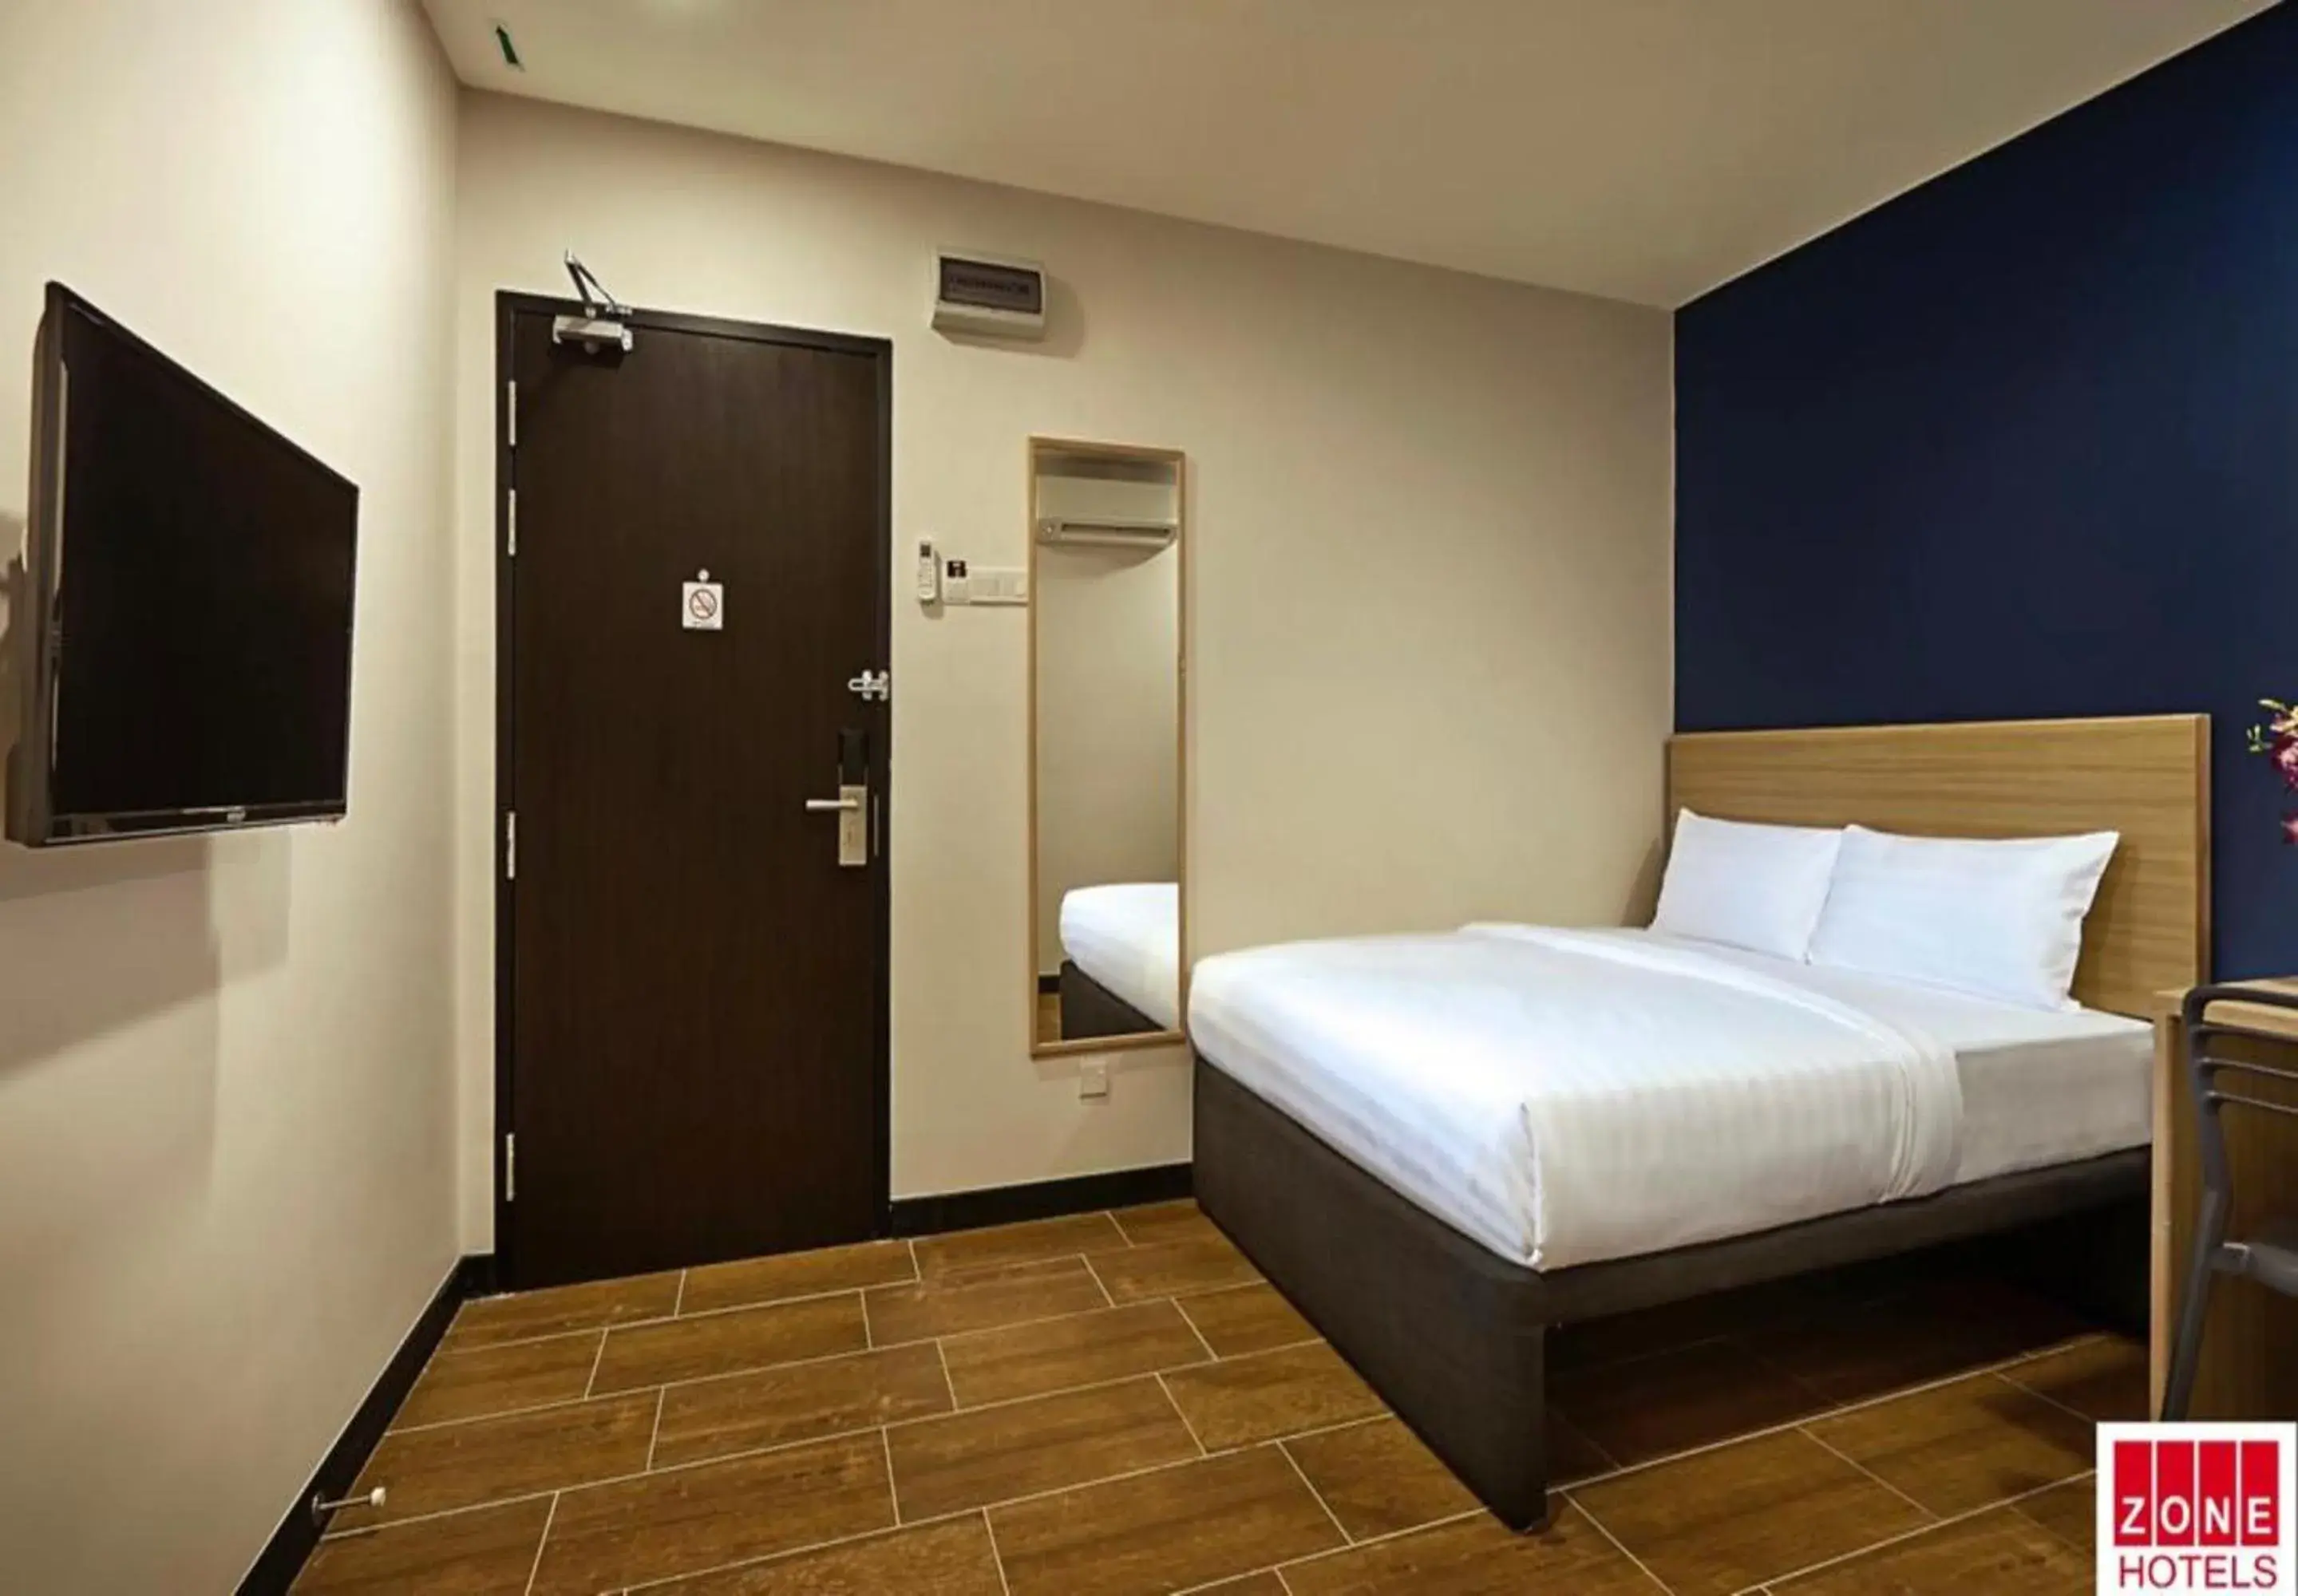 Bedroom, Bed in ZONE Hotels, Telok Panglima Garang